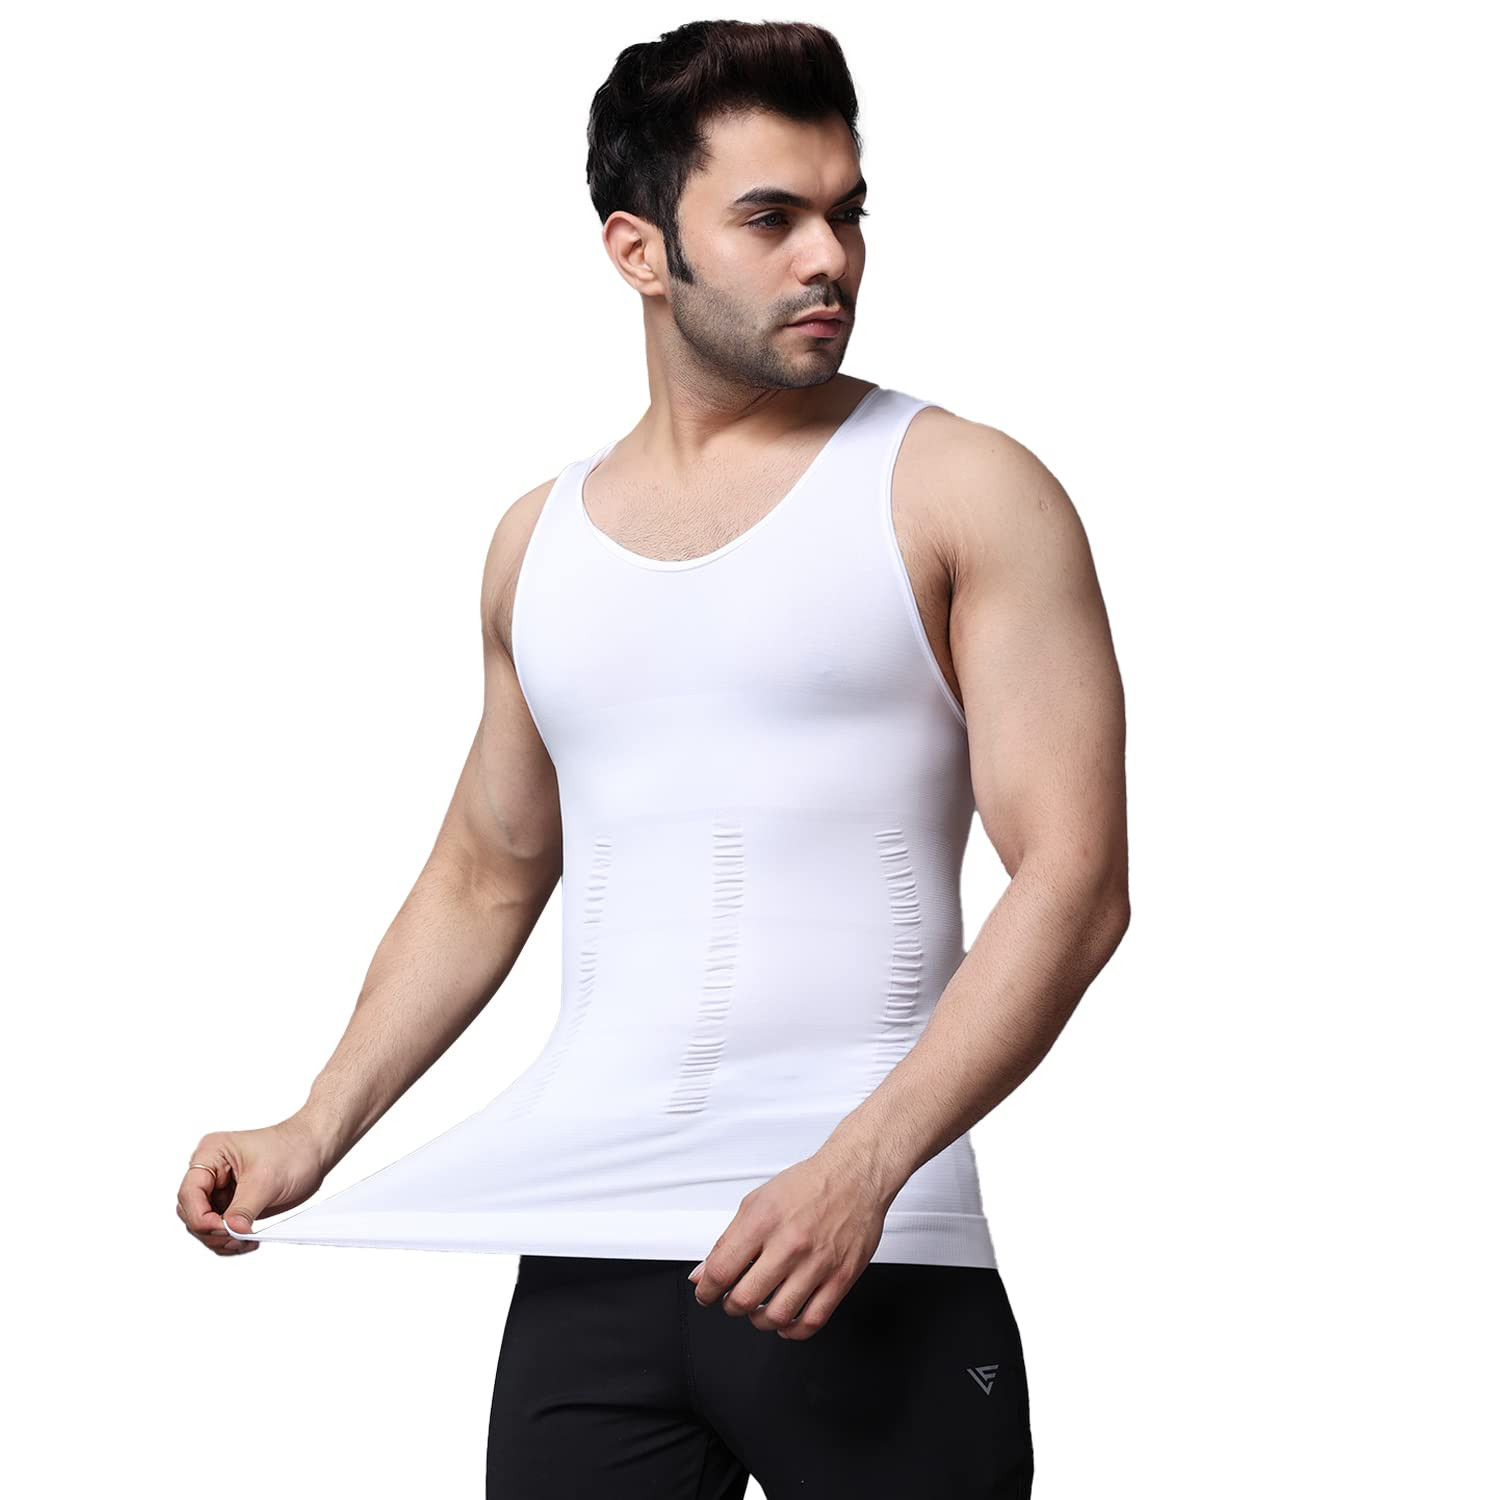 https://www.fastemi.com/uploads/fastemicom/products/ff-tummy-tucker-vest-abs-abdomen-slimming-body-shaper-men-shapewear-color--white-size--xxxlsize-50-277894026098099_l.jpg